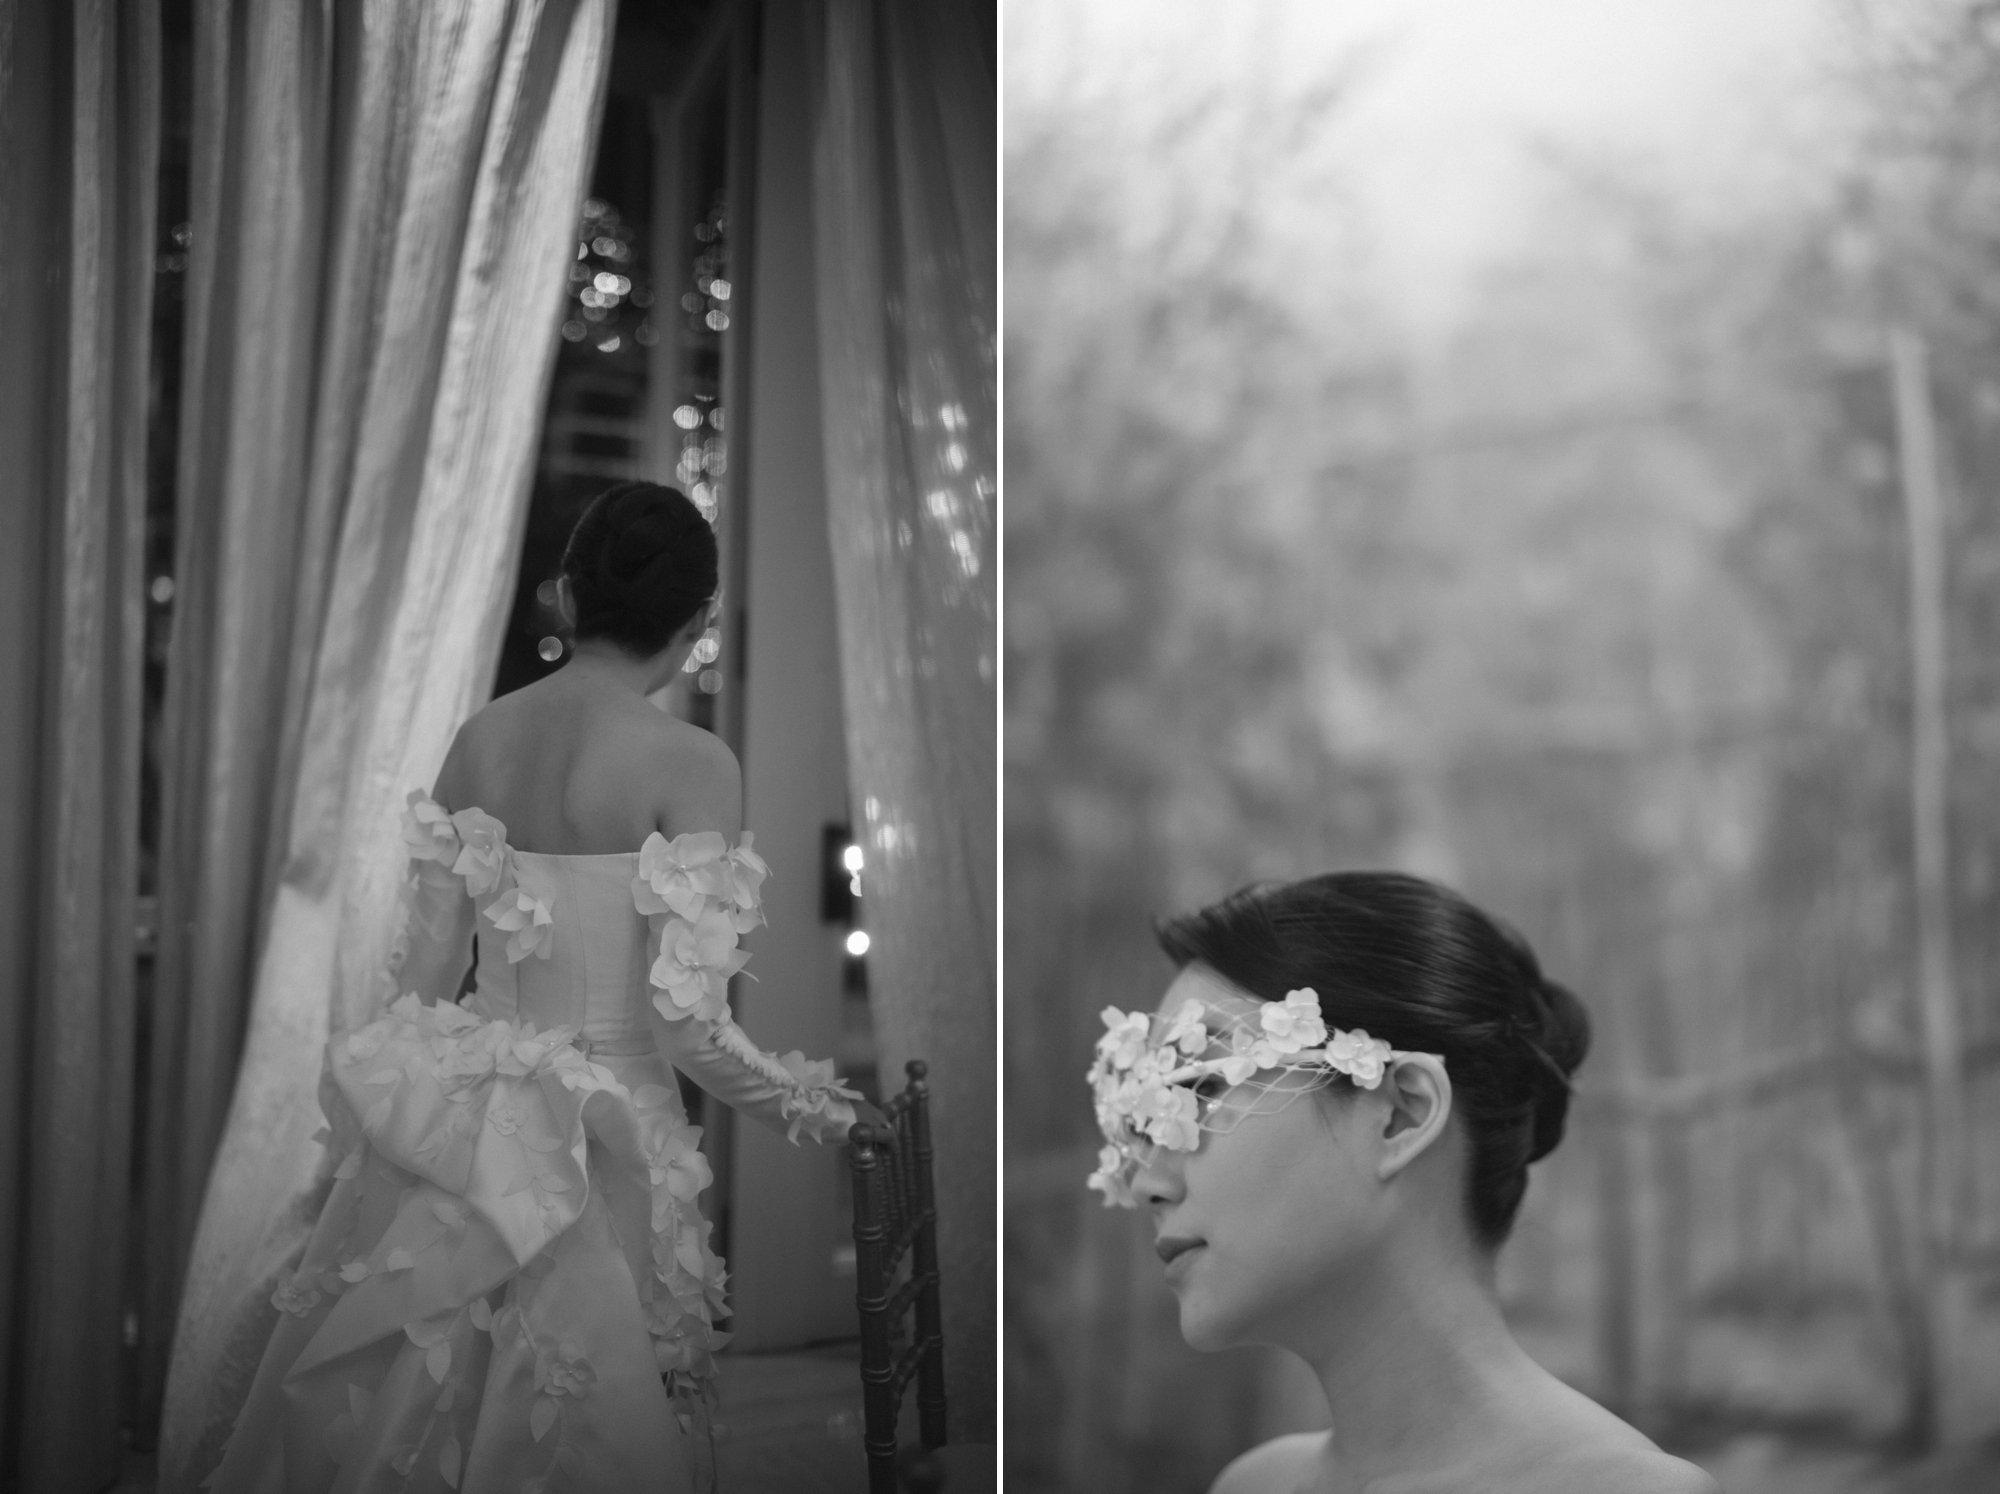 Prawira-Evelyn-Dolomites-Italy-Santre wedding-Yefta Gunawan-Jeriko MUA-Carol Kuntjoro Photography-68.jpg